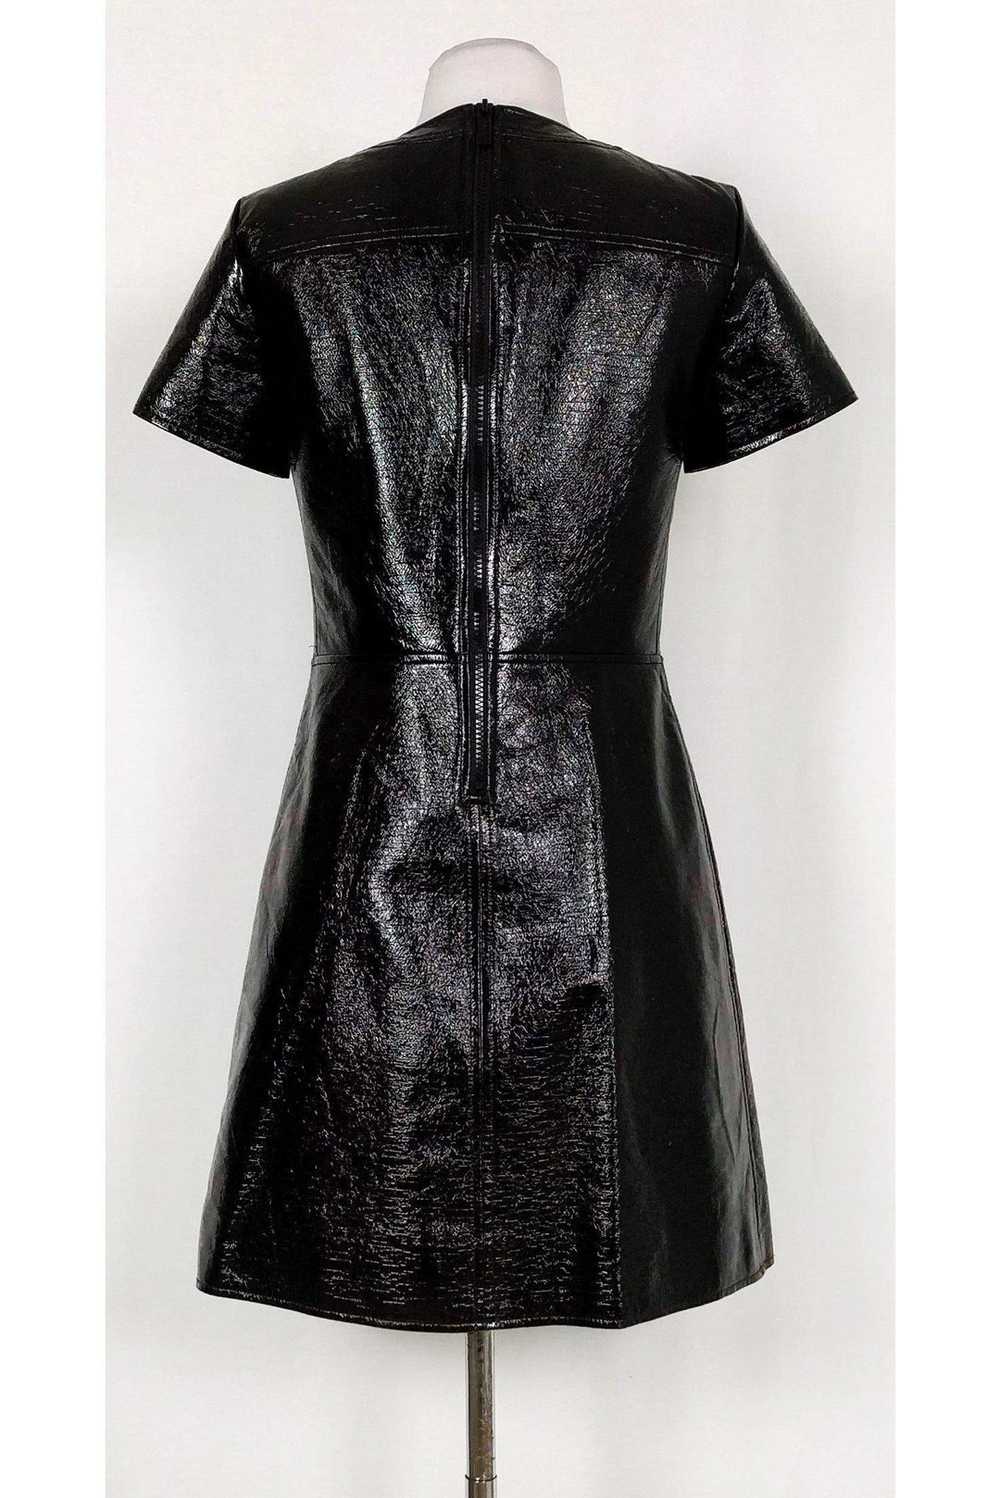 Michael Kors - Black Vinyl Sheath Dress Sz 2 - image 3